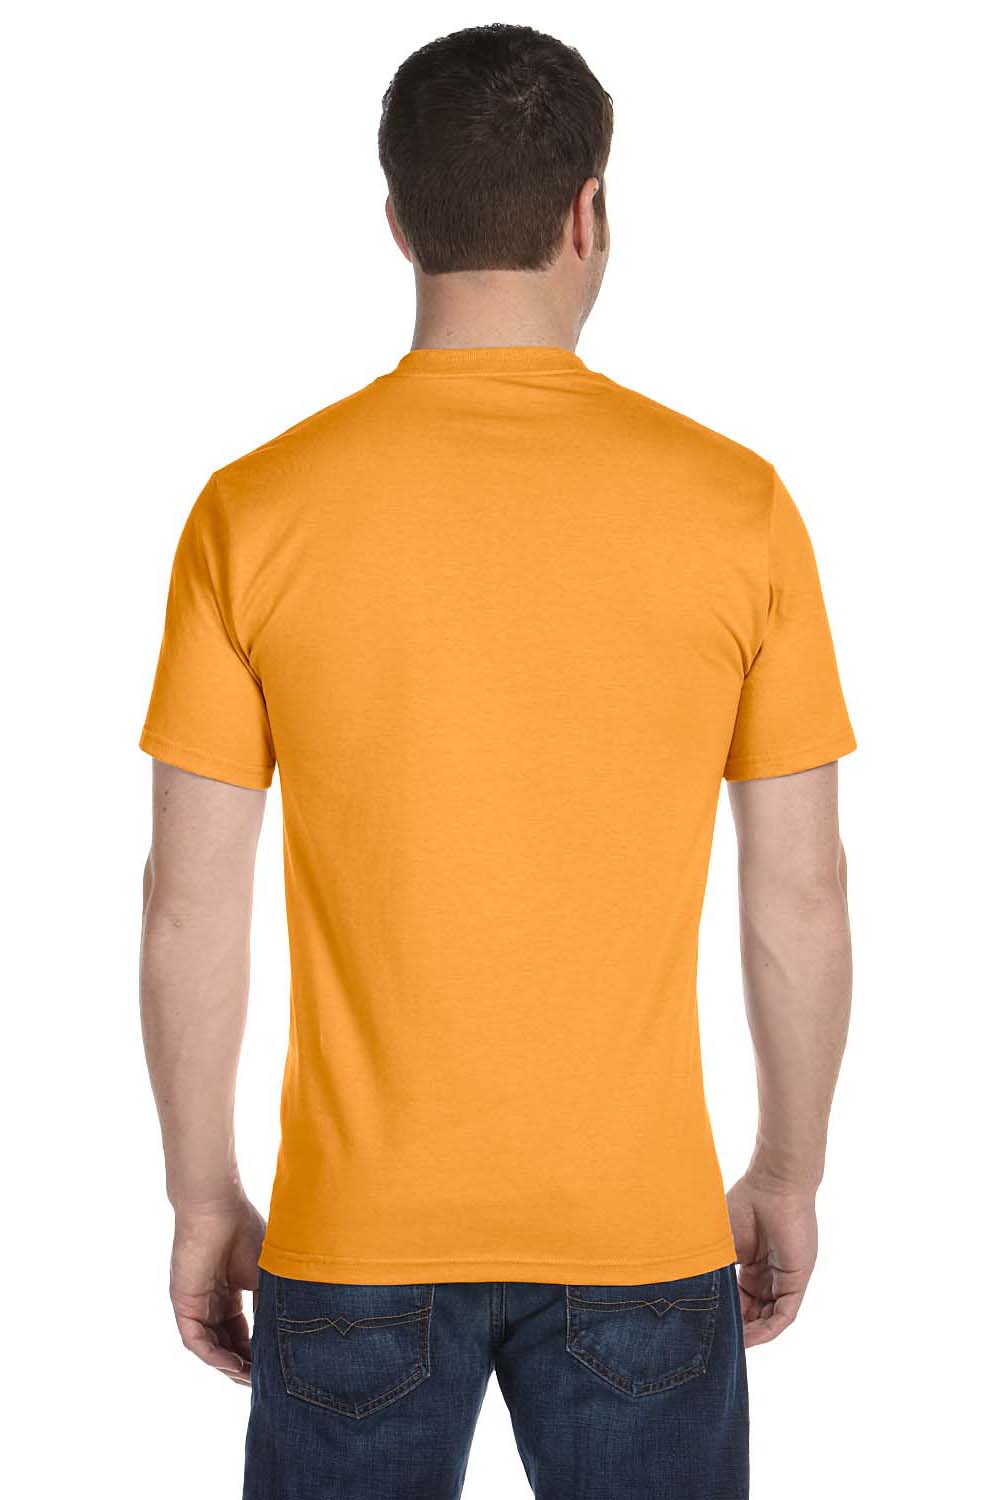 Hanes 5180 Mens Beefy-T Short Sleeve Crewneck T-Shirt Gold Back